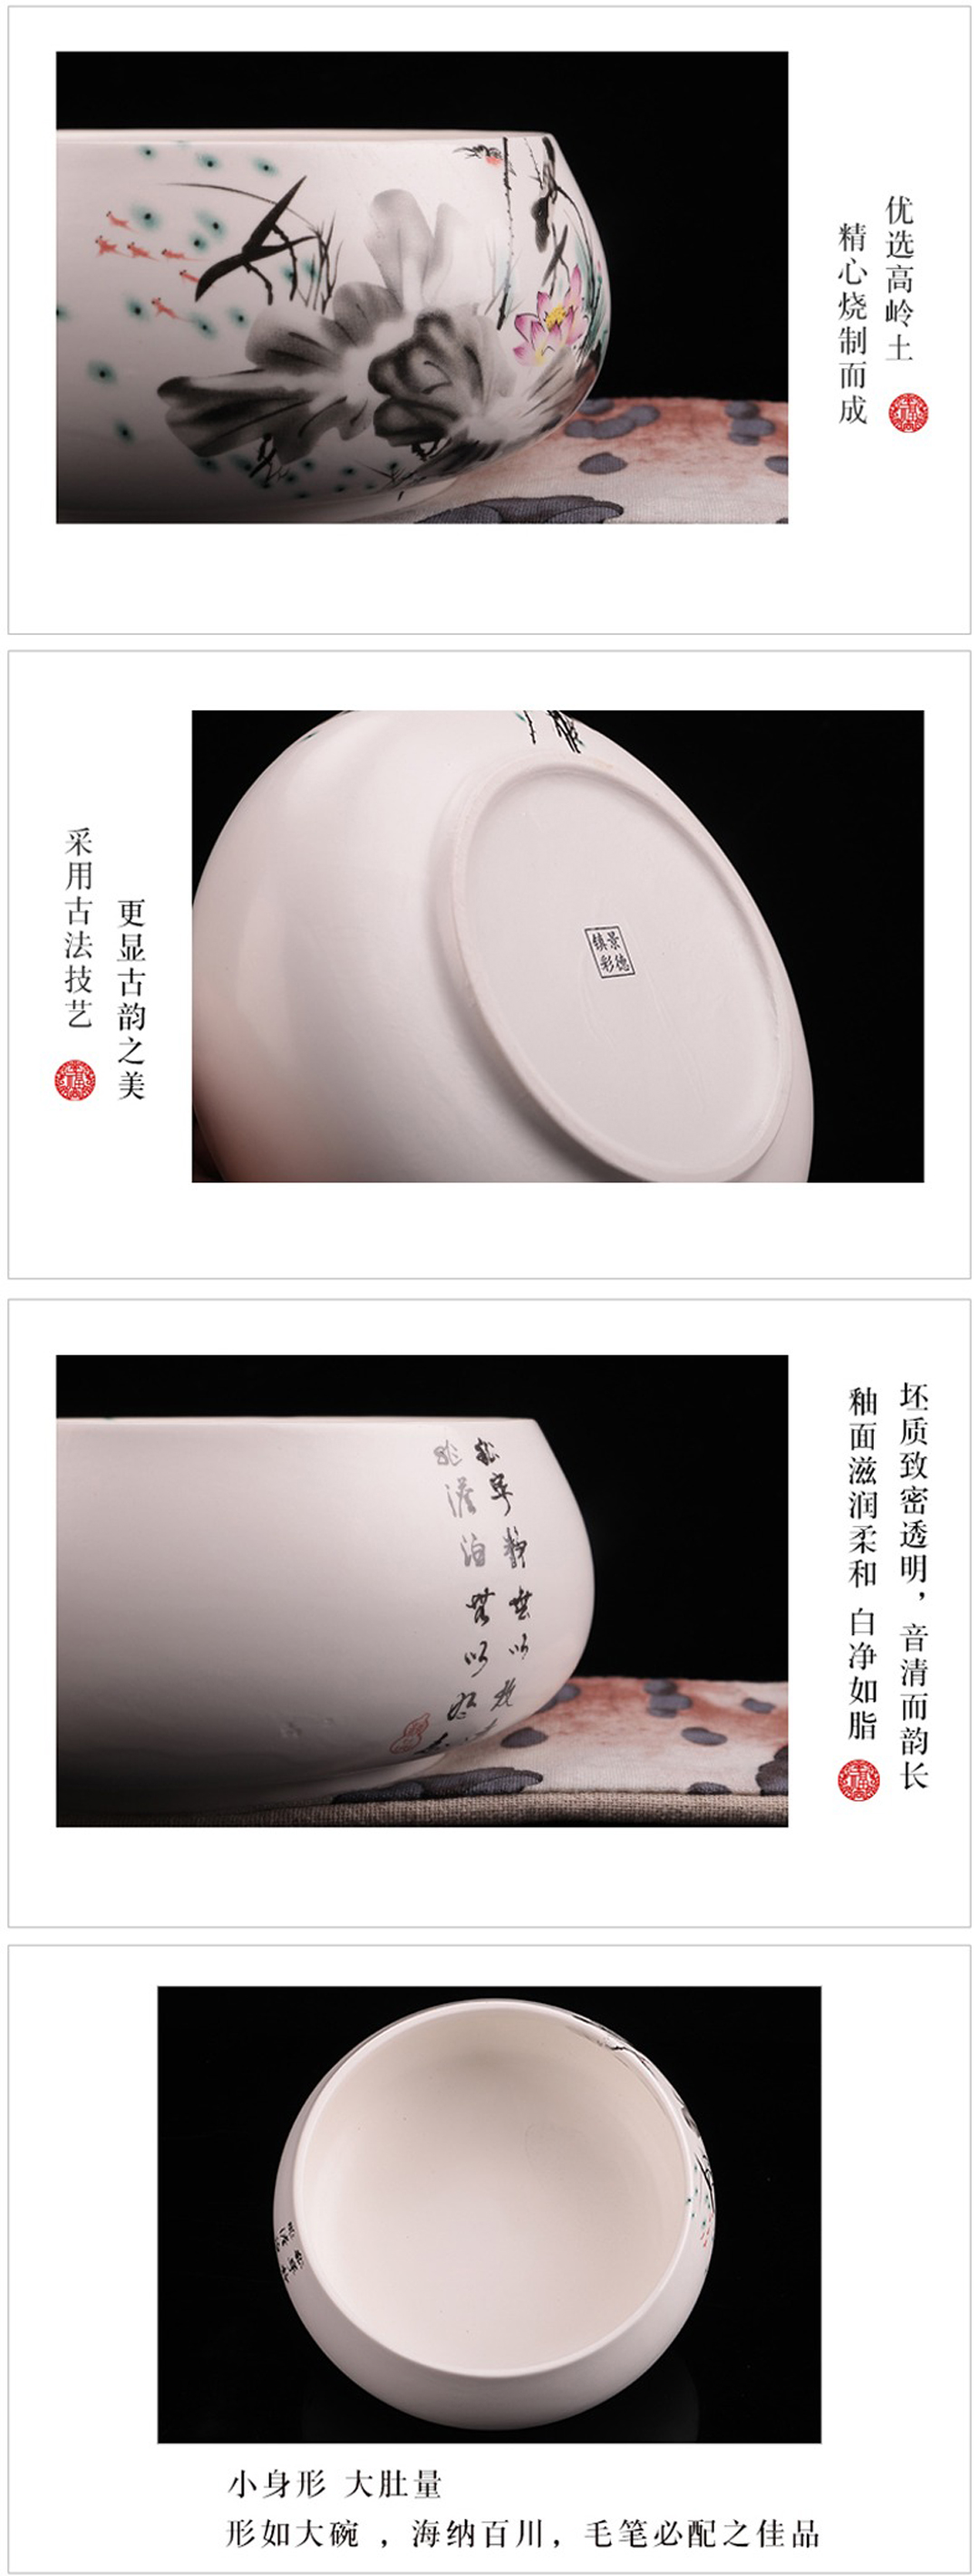 WFBX0001-Isocool·陶瓷笔洗-14.5cm×17.5cm×7.1cm-03.jpg